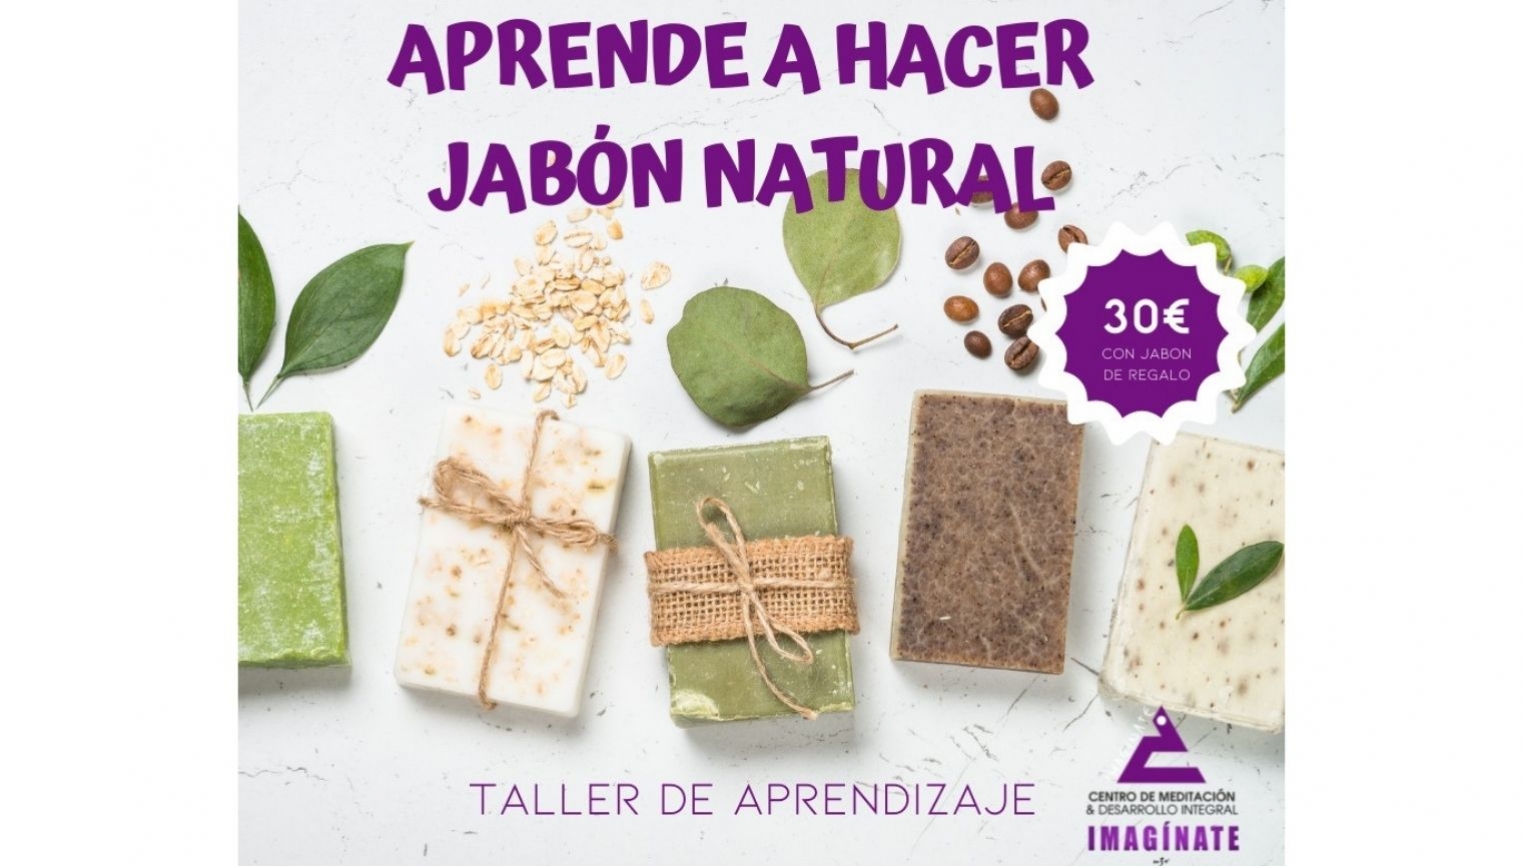 Aprende a Hacer Jabón artesanal natural 30€ con jabón de regalo - foto 4/6